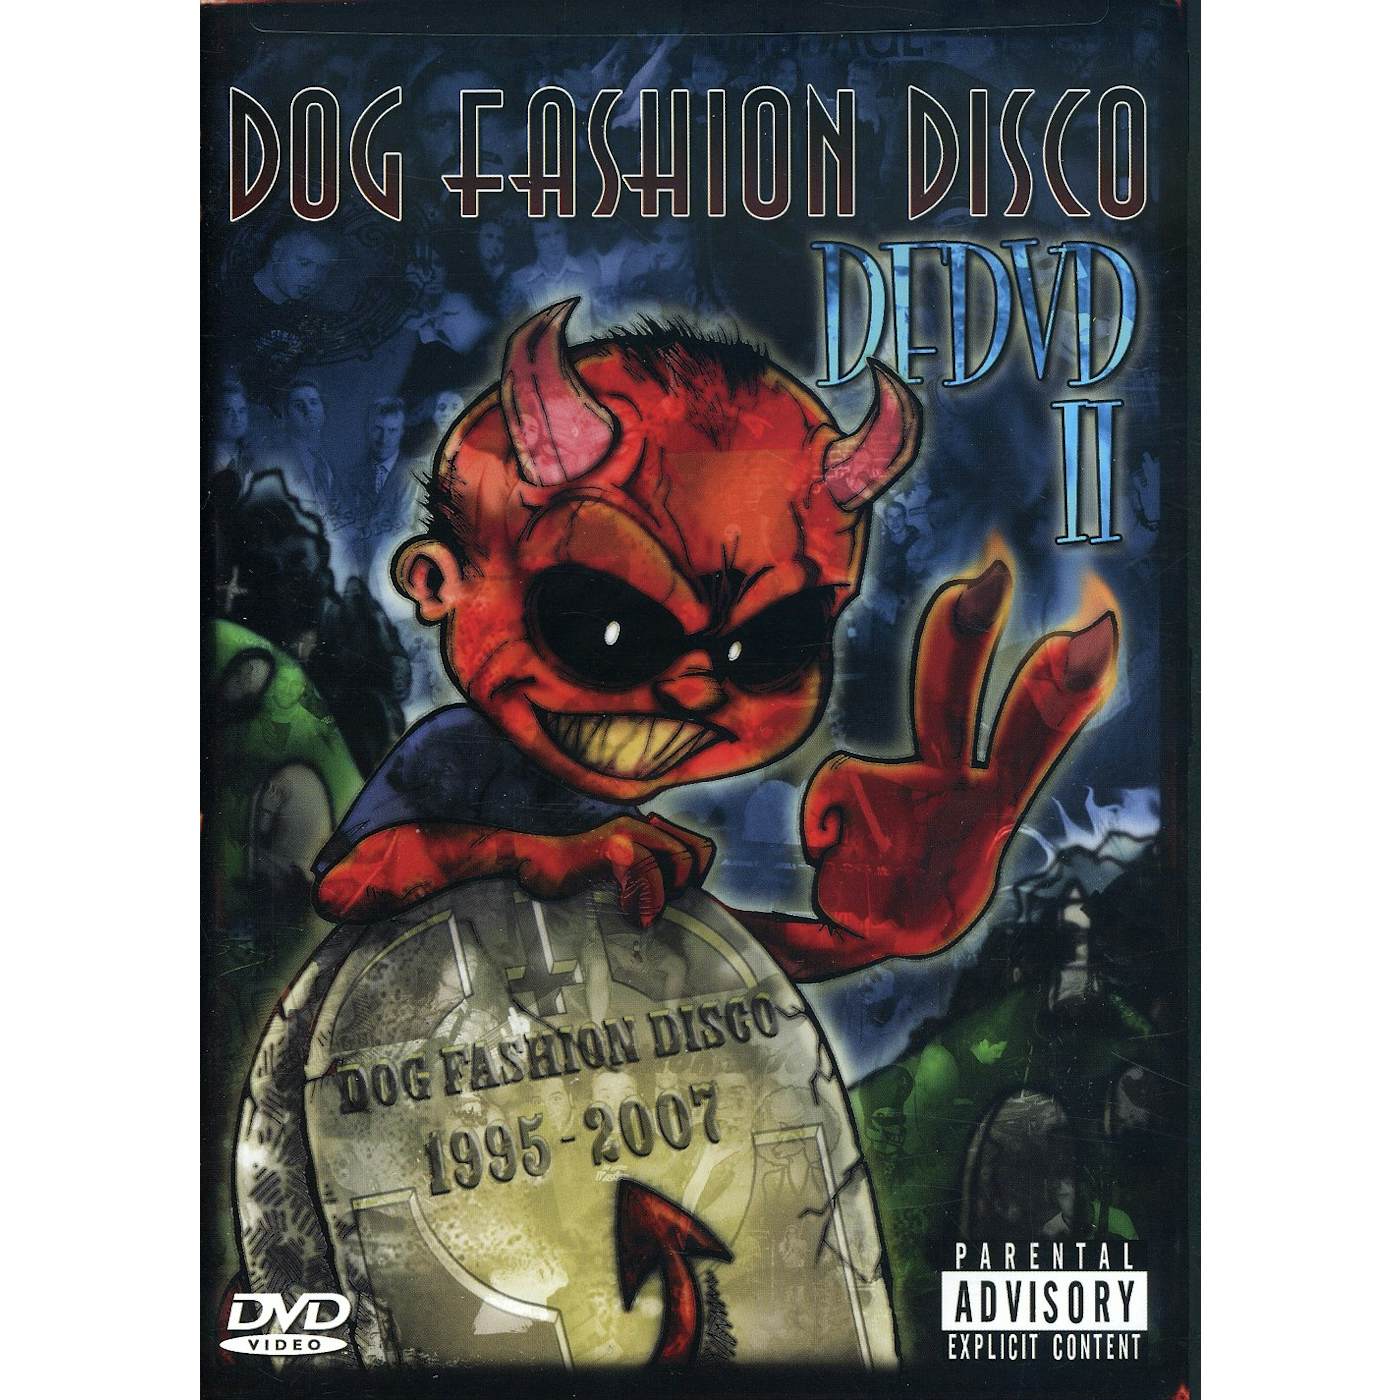 Dog Fashion Disco DFDVD 2 DVD